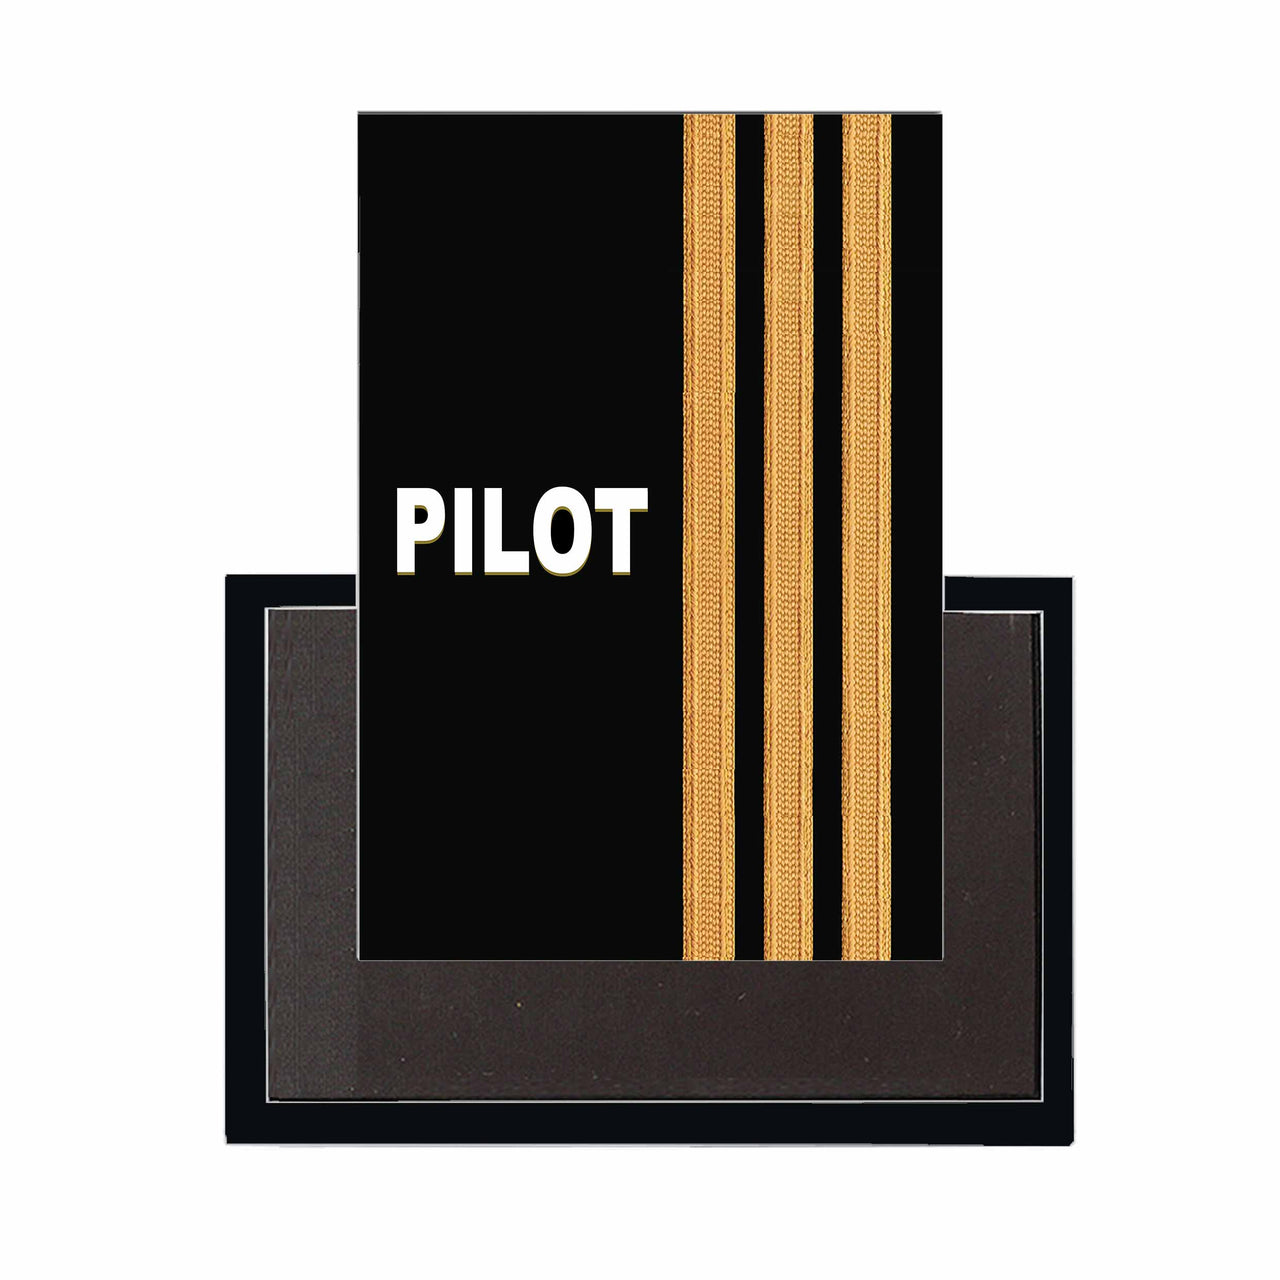 PILOT & Epaulettes 3 Lines Designed Magnets